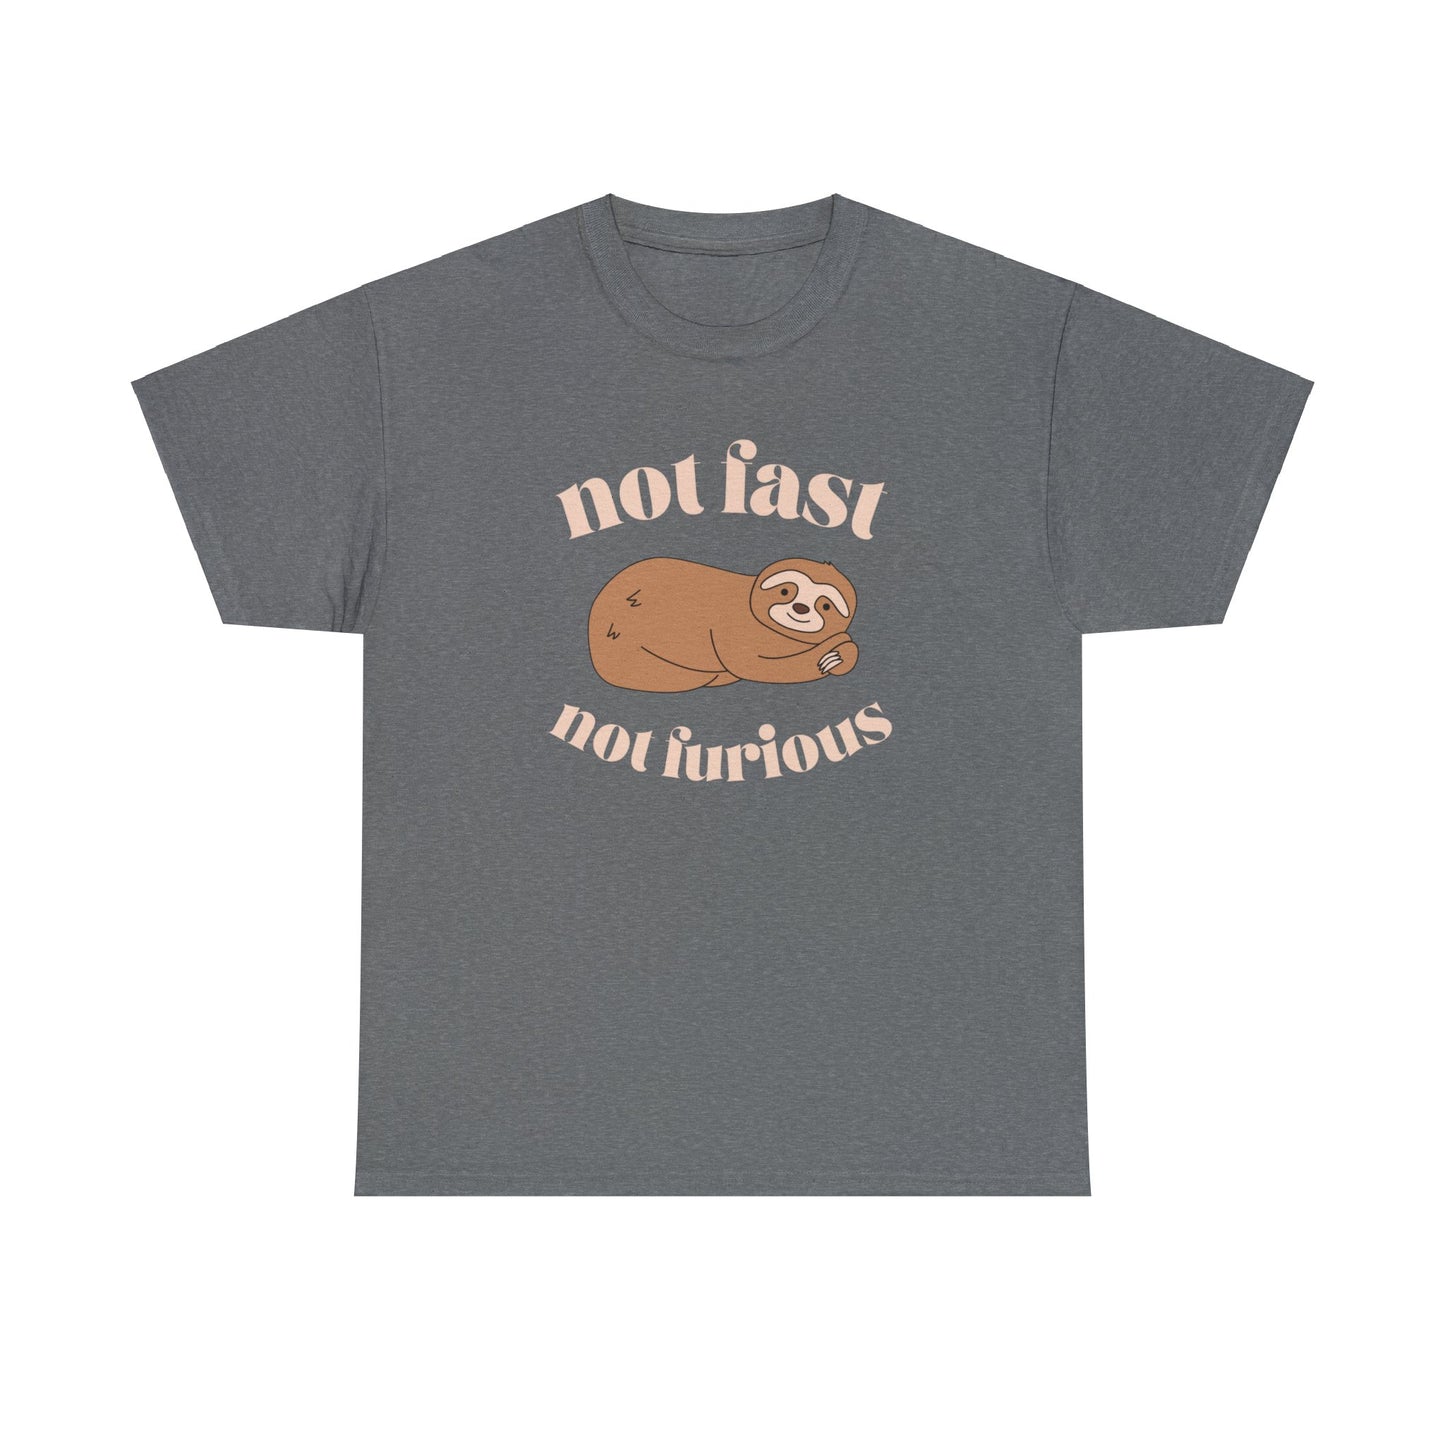 Not fast not furious t-shirt - adult